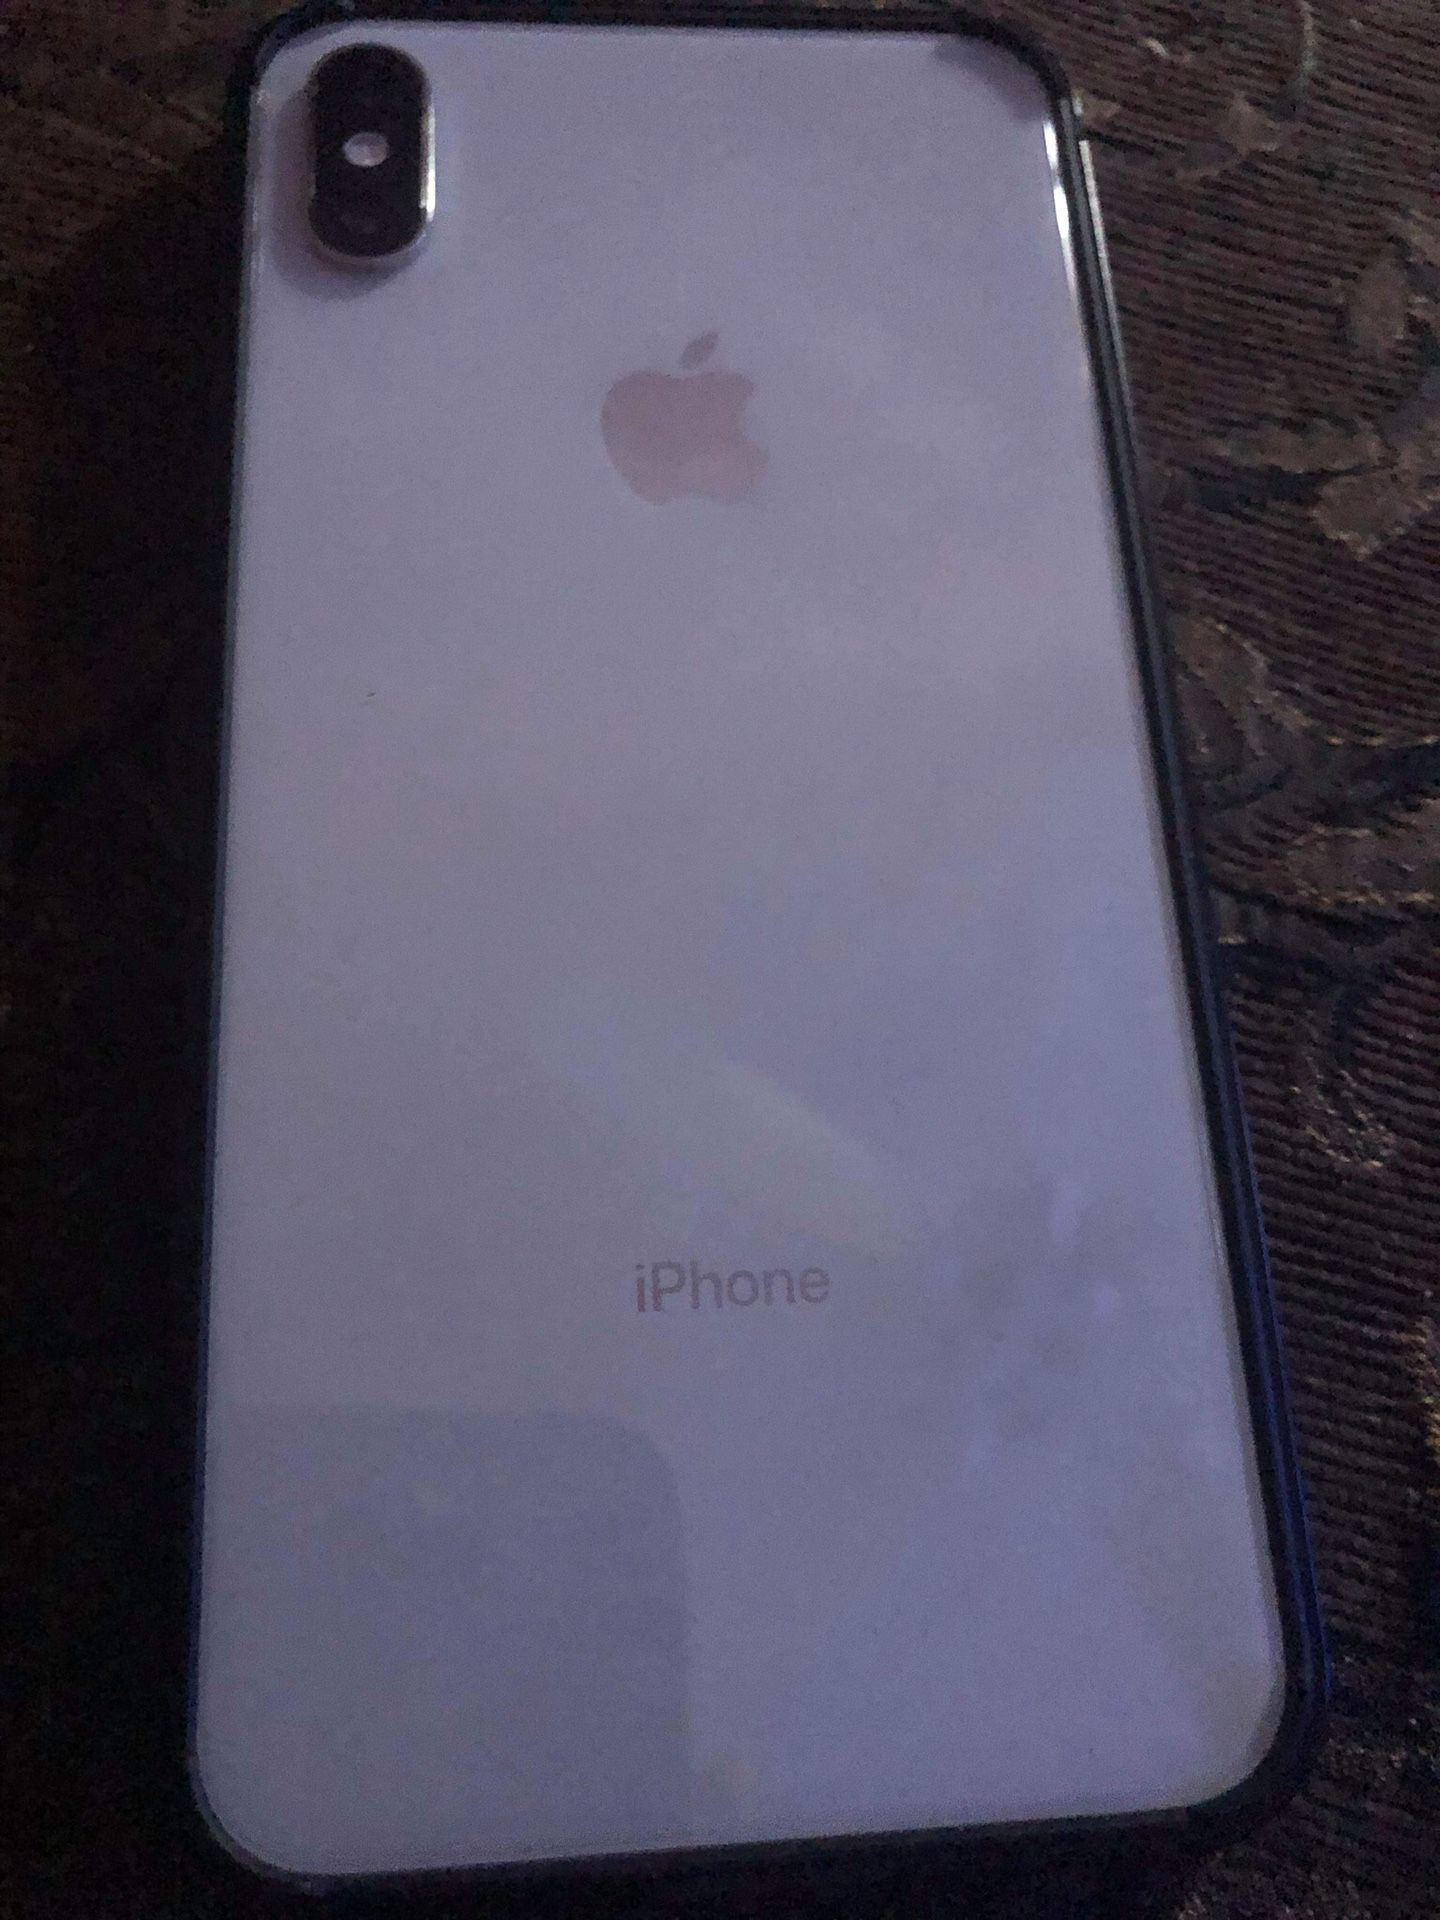 Apple iPhone XS Max silver unlocked256gb